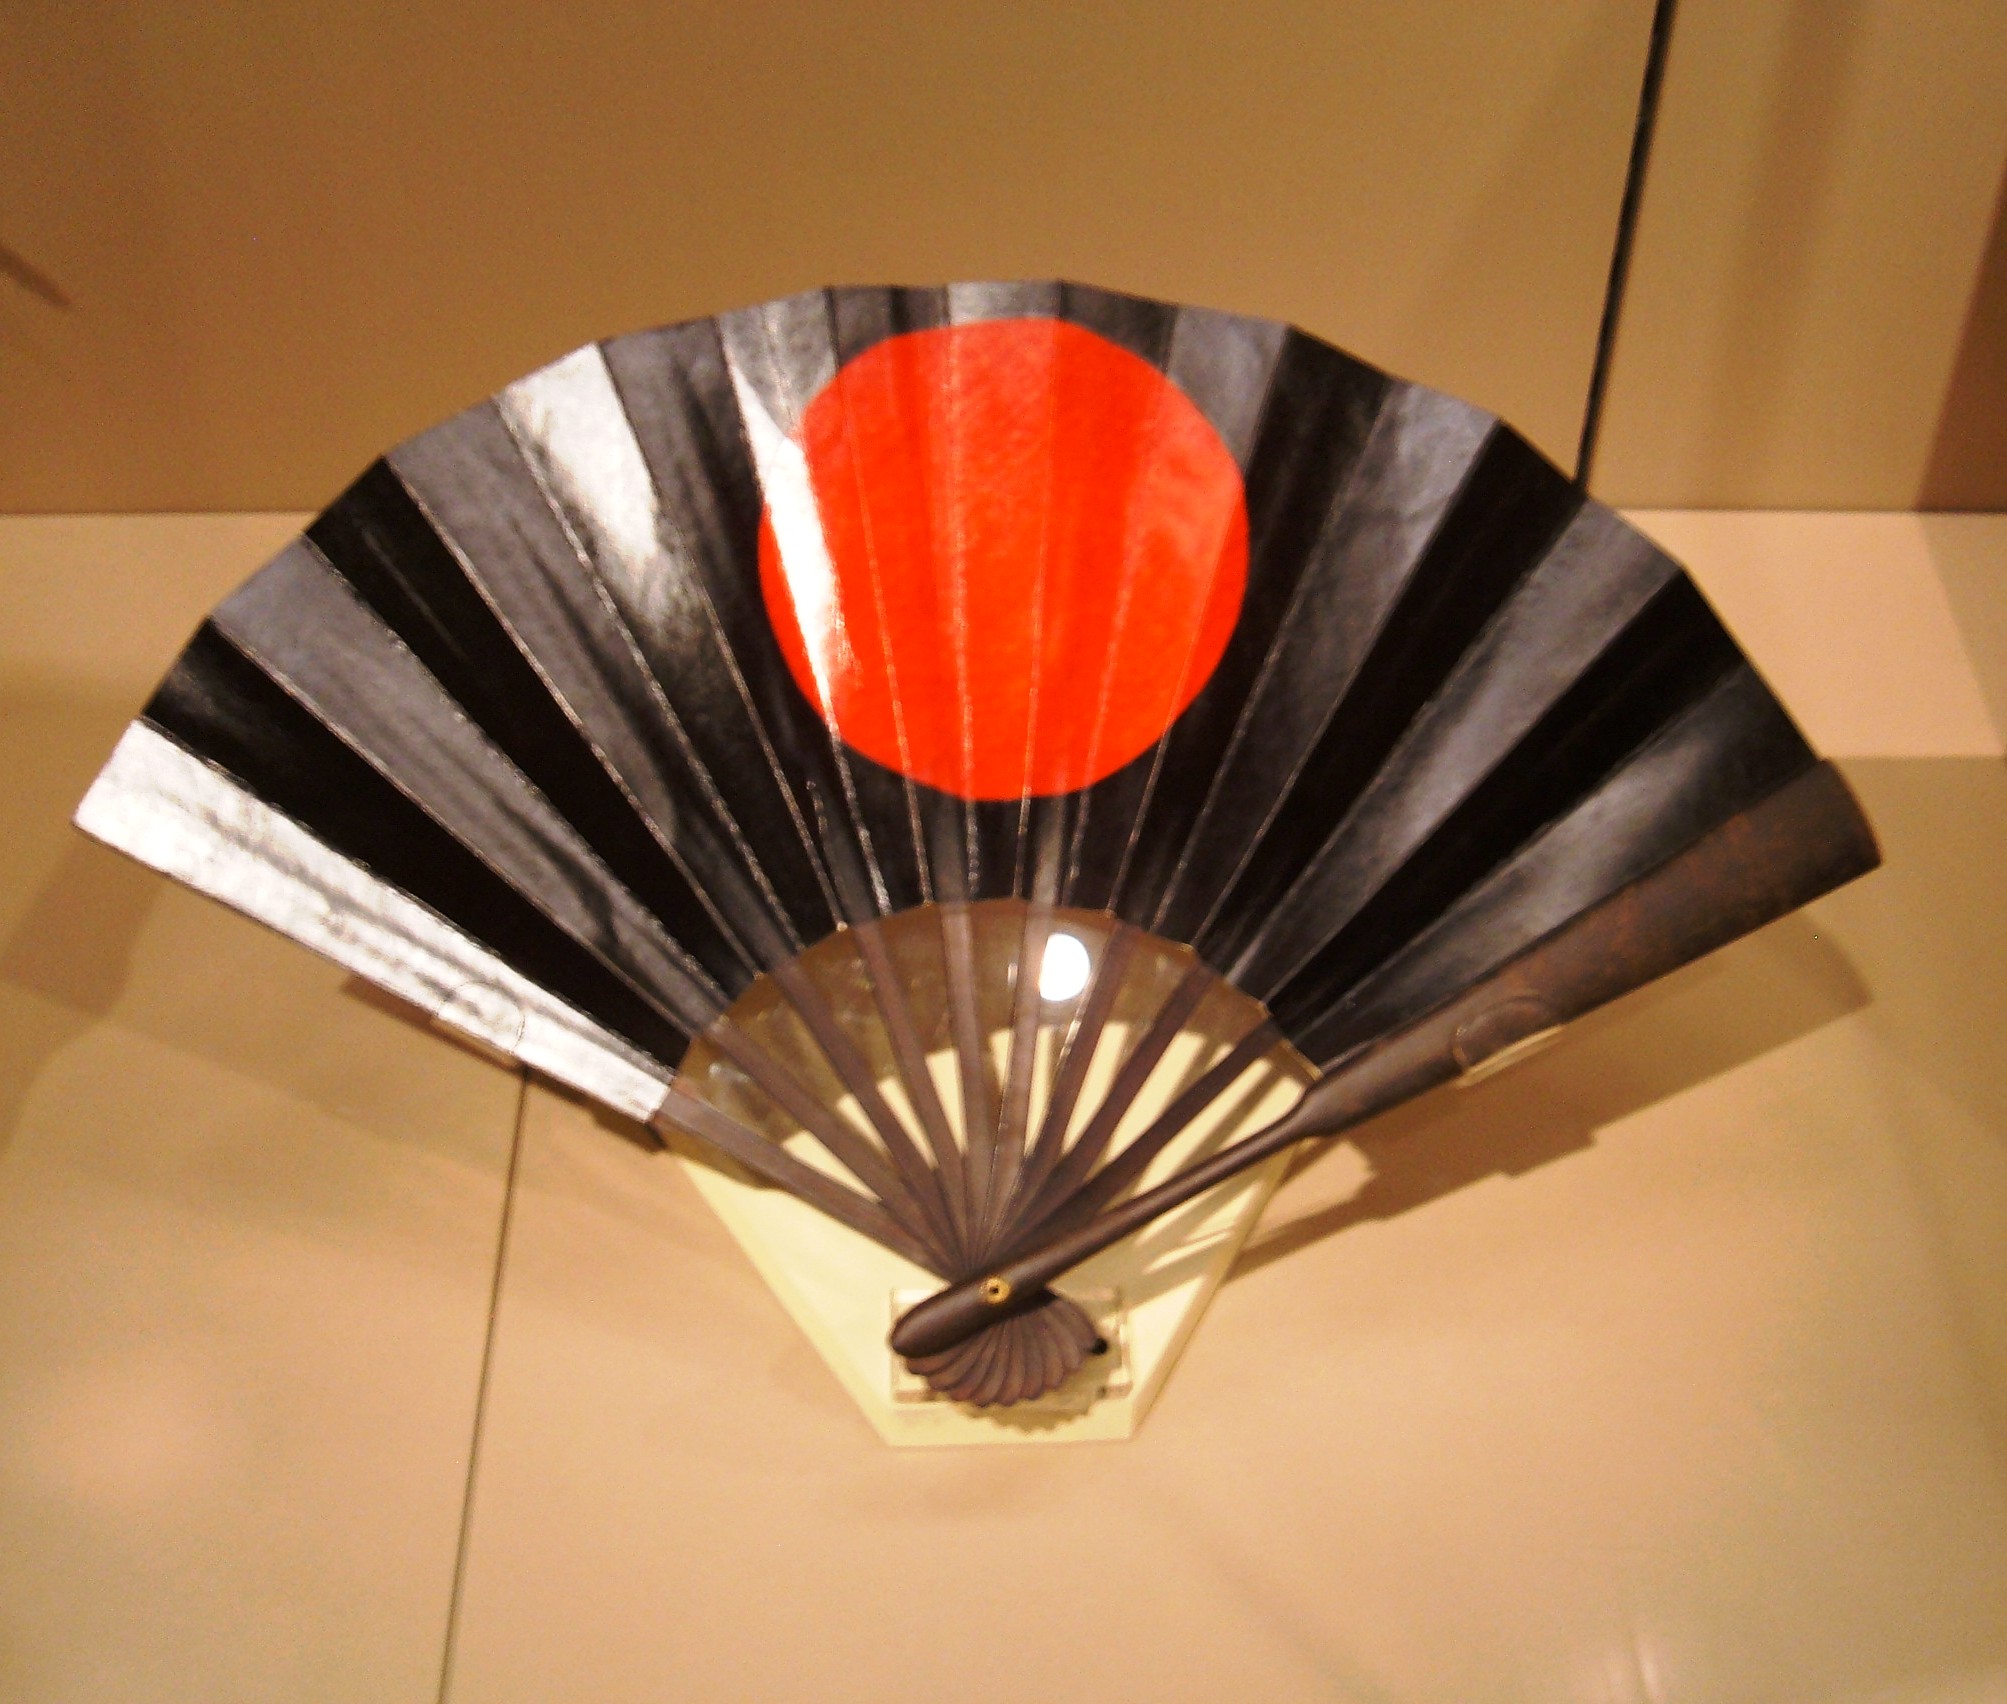 http://upload.wikimedia.org/wikipedia/commons/5/56/Gunsen_Asian_Art_Museum_SF.JPG